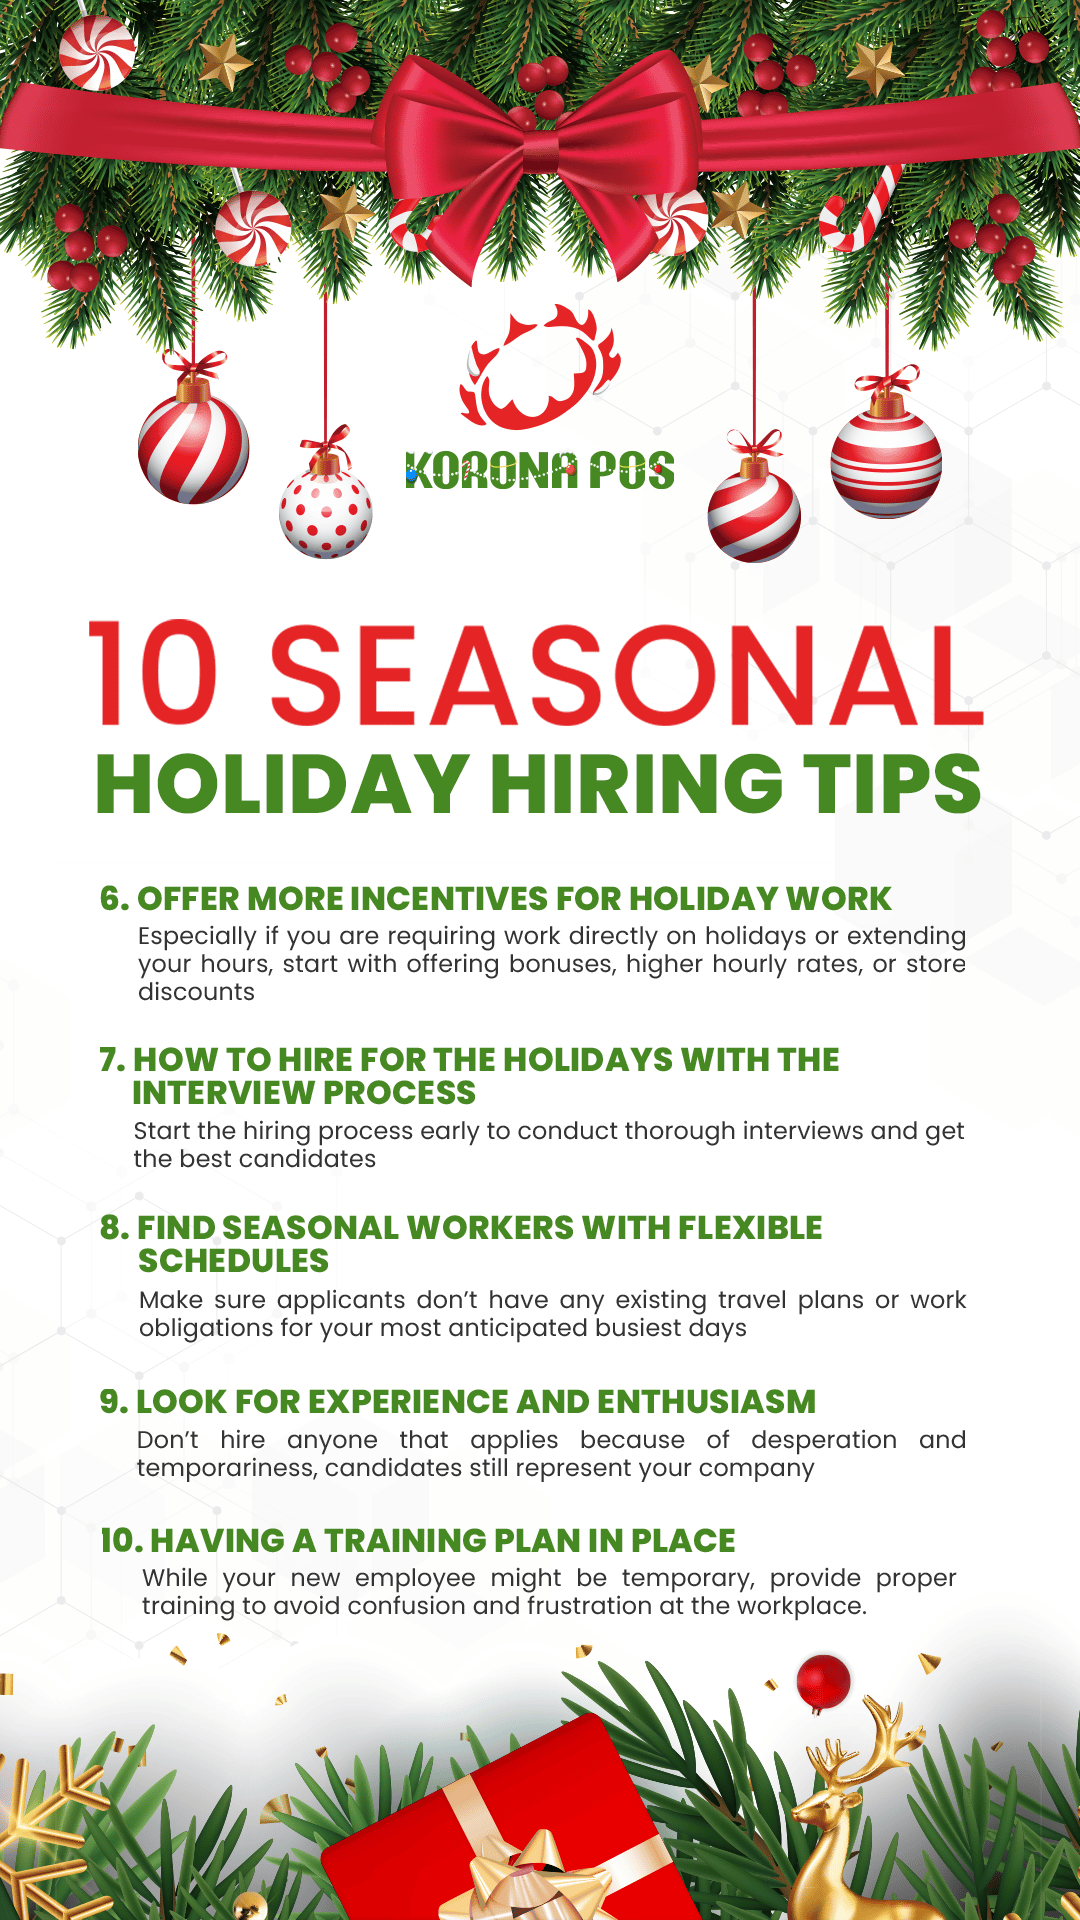 Tips 6-10 on seasonal holiday hiring